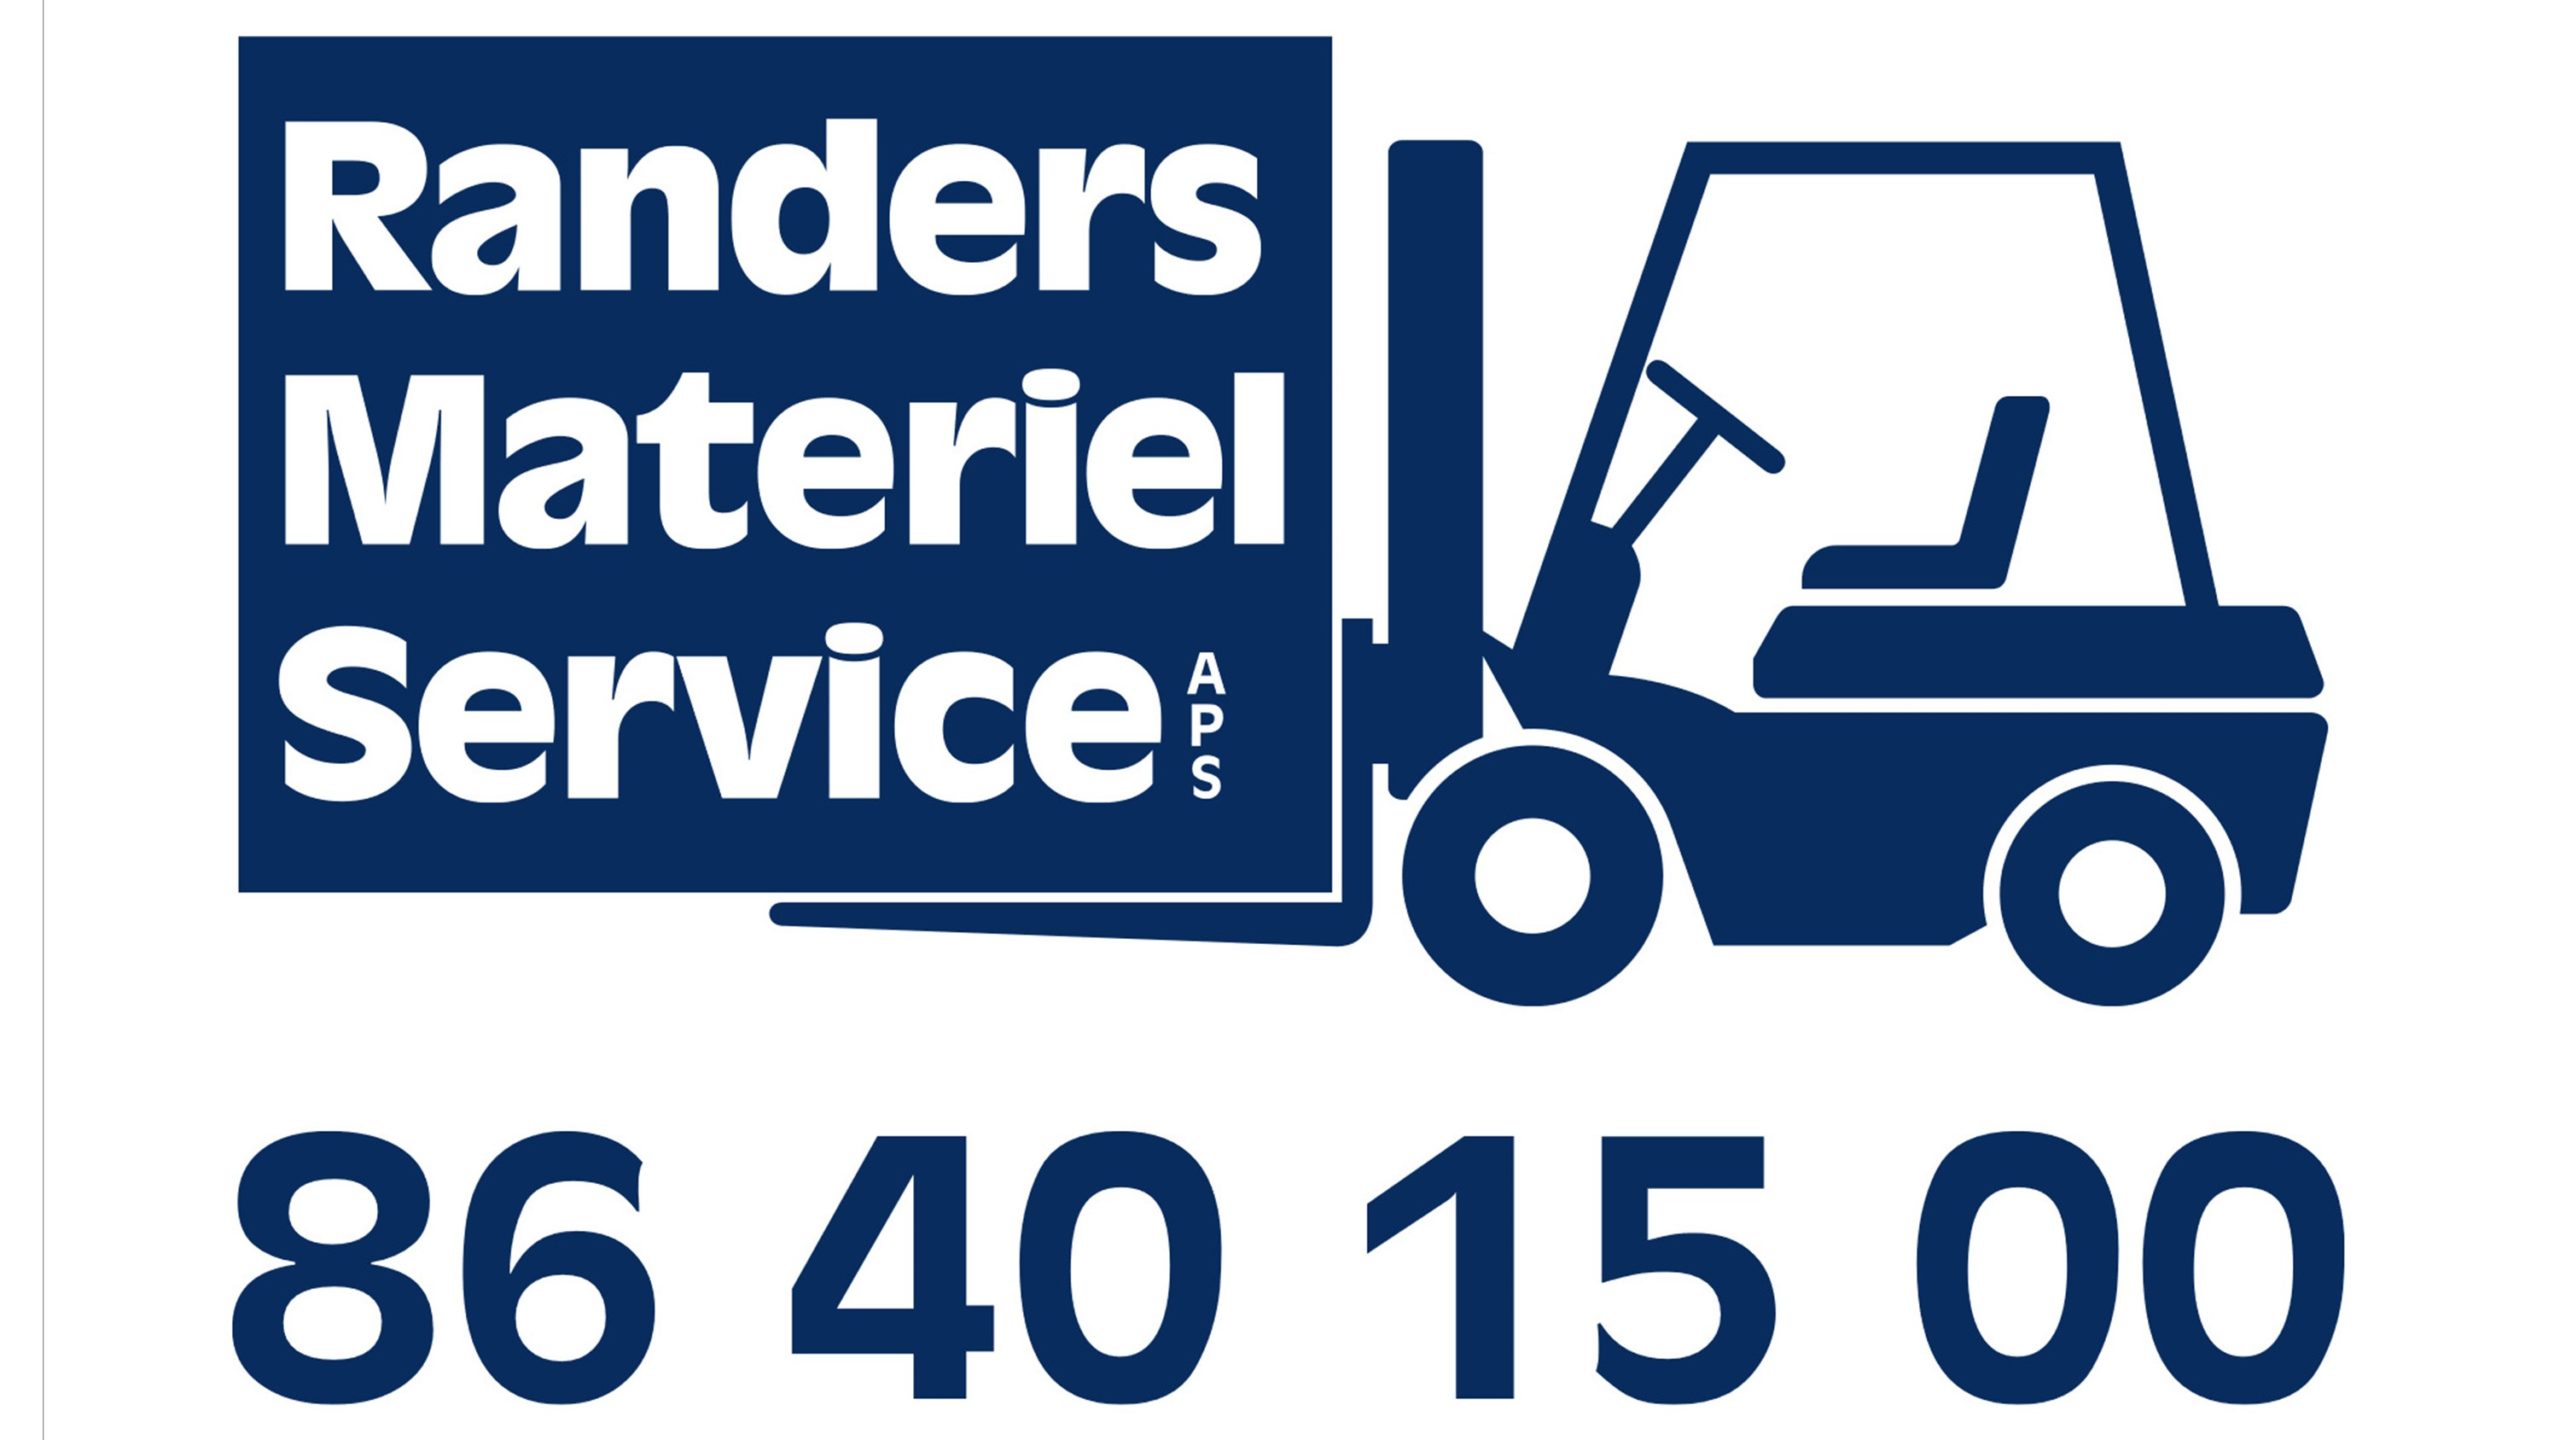 Randers Materiel Service